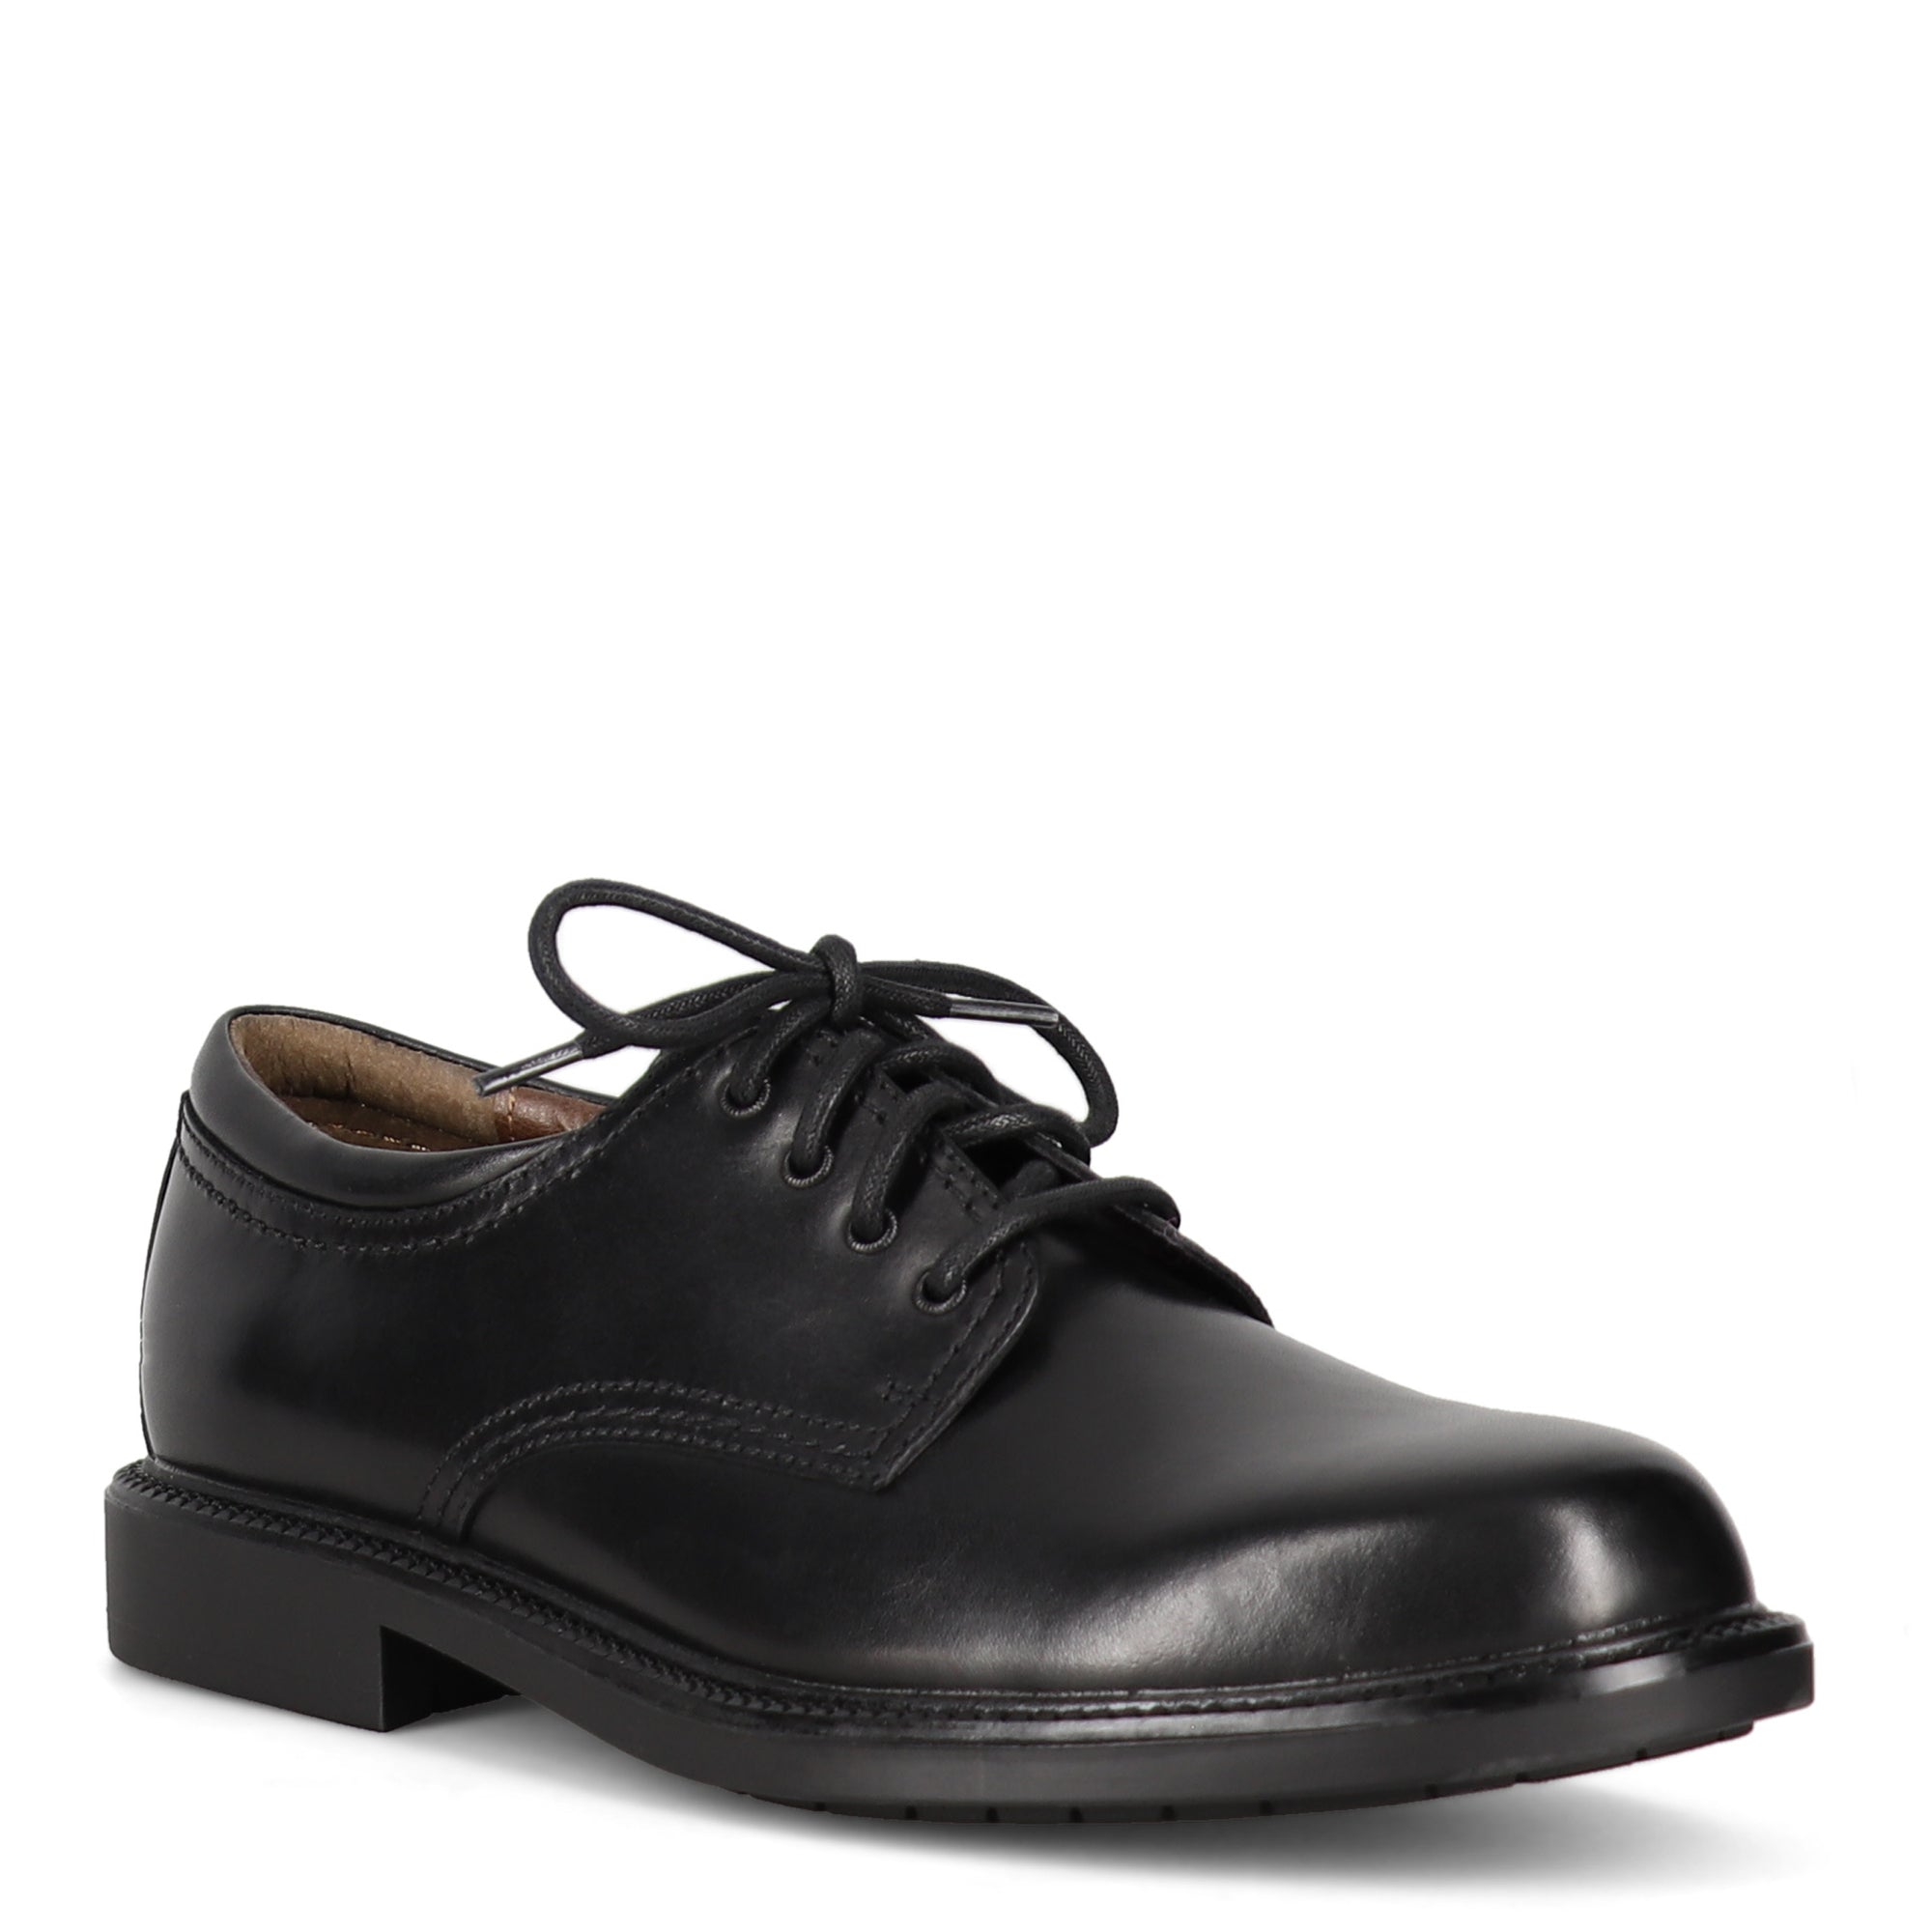 Dockers Shoes Gordon Black Shoes